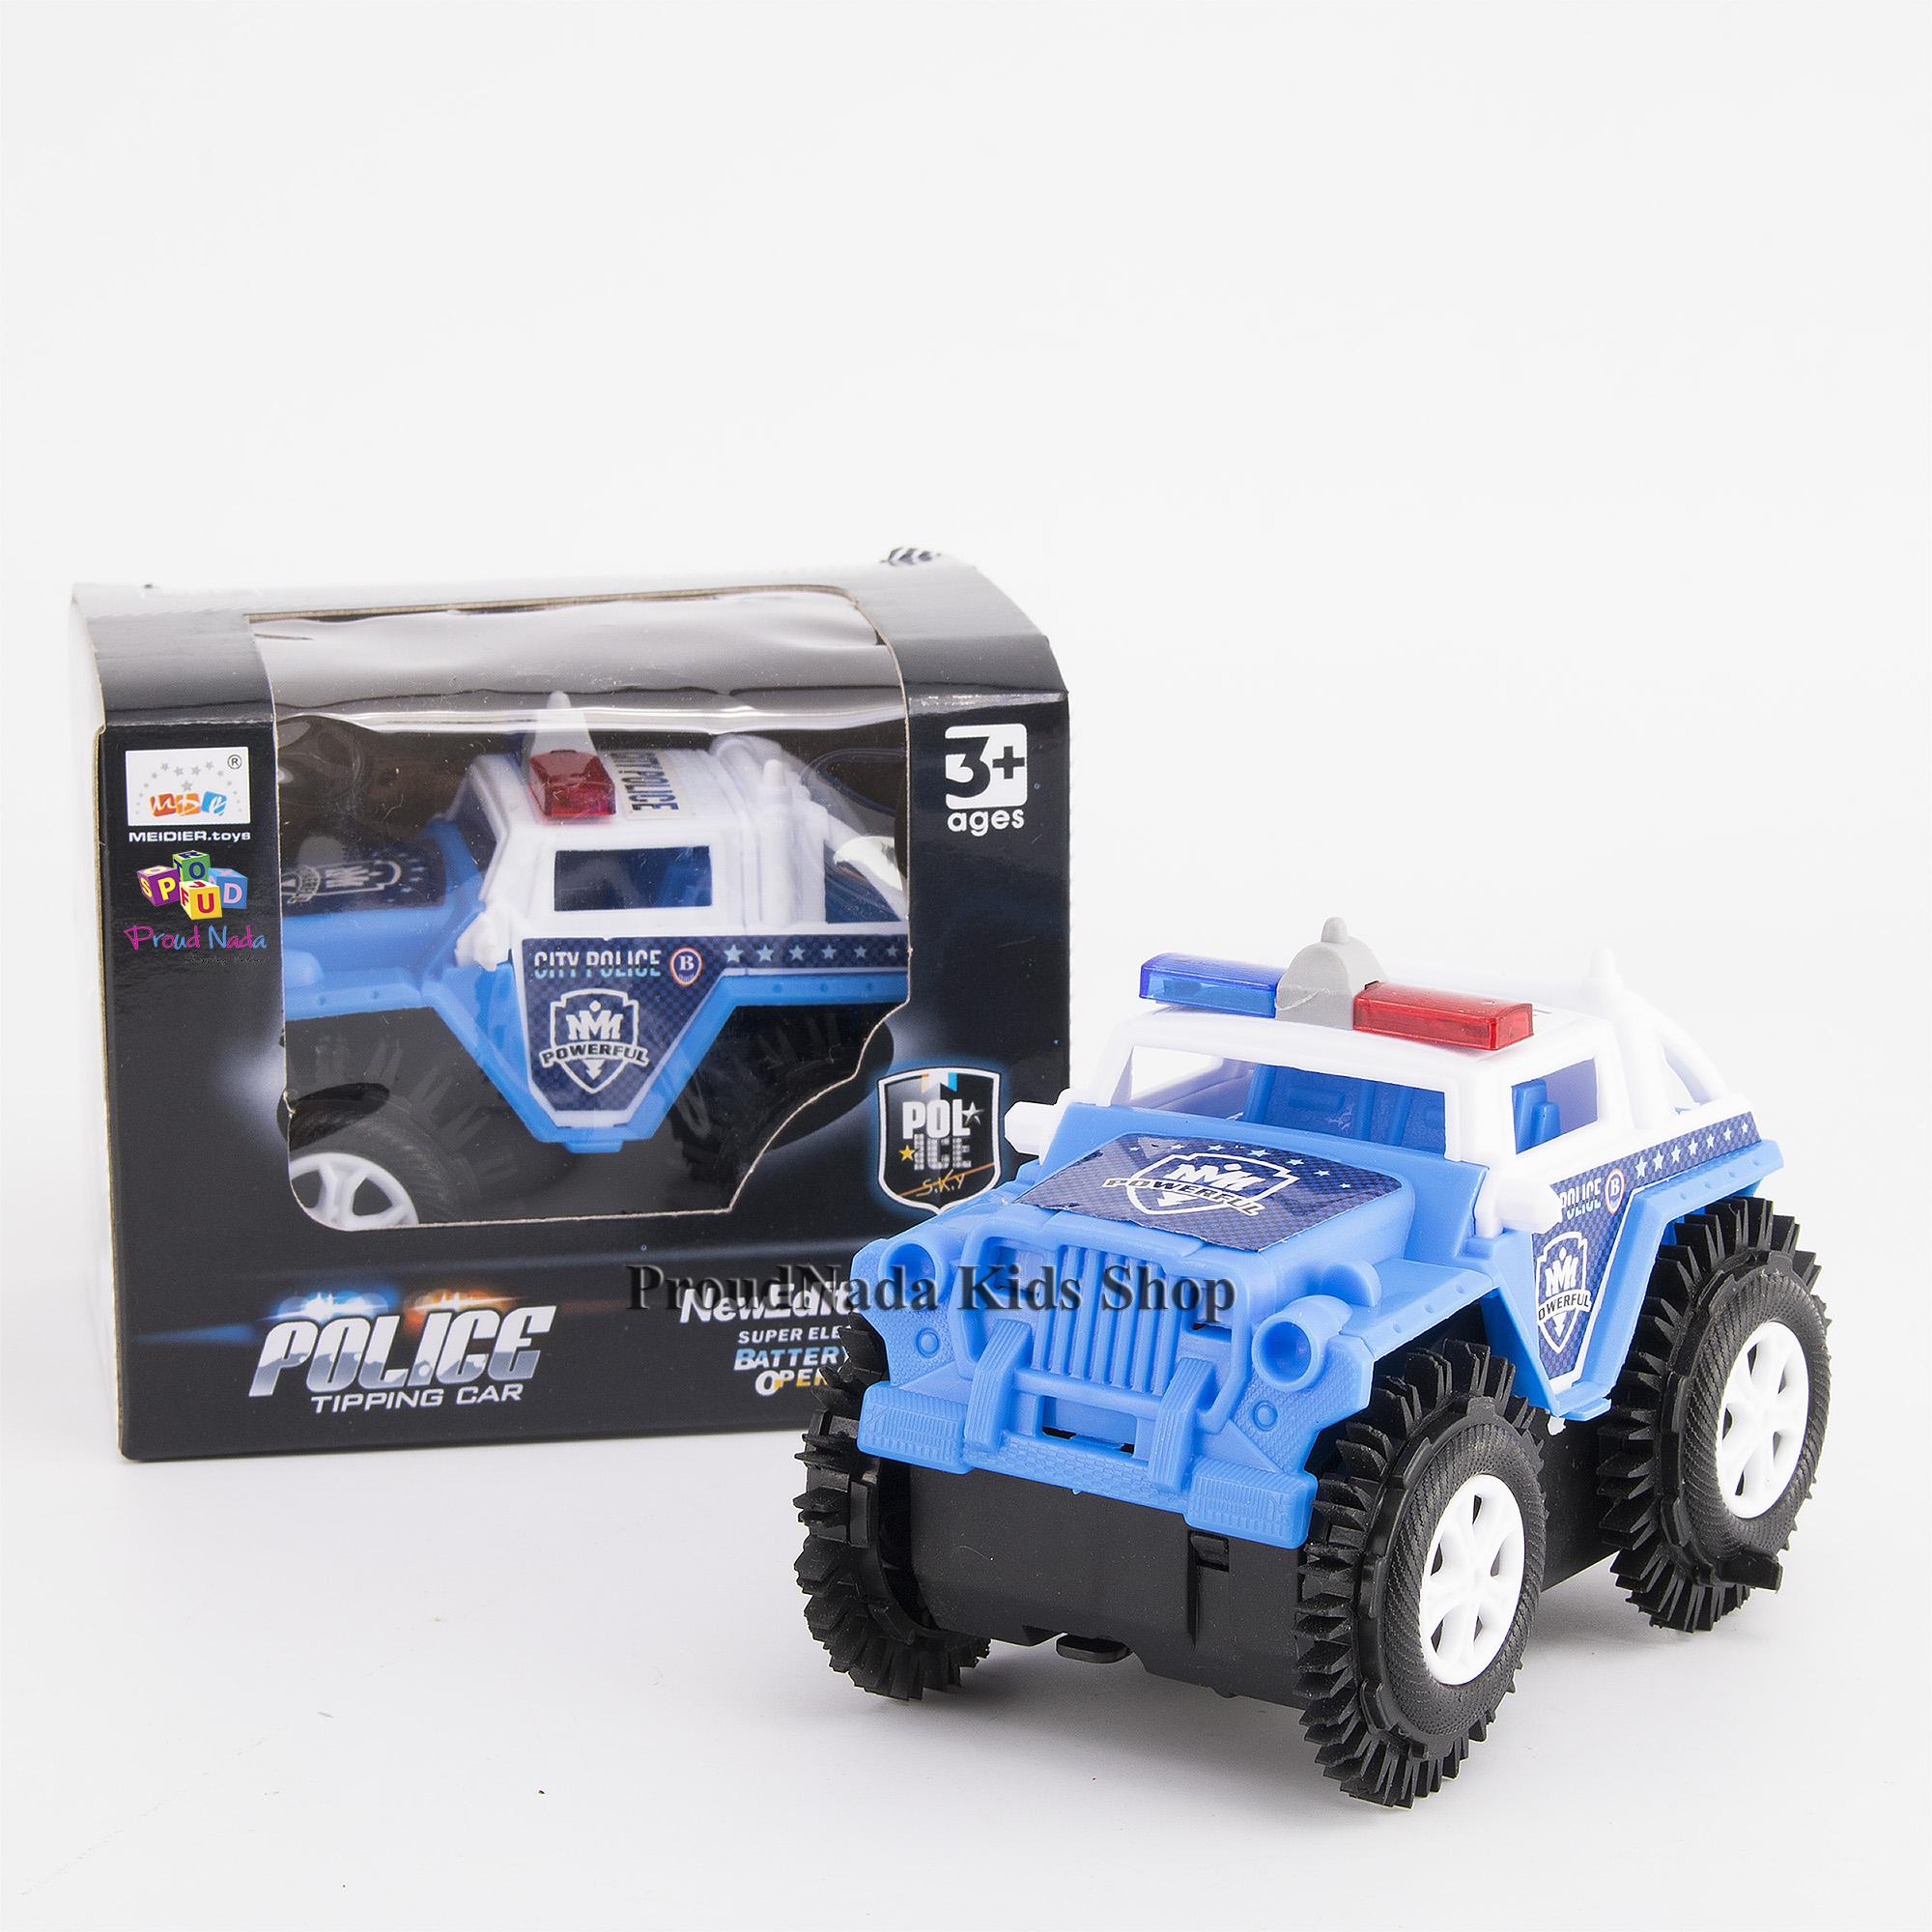 ProudNada Toys ของเล่นเด็กรถตำรวจตีลังกา MEIDIER.toys POLICE TIPPING CAR NP.M11-2 สี สีฟ้า สี สีฟ้า